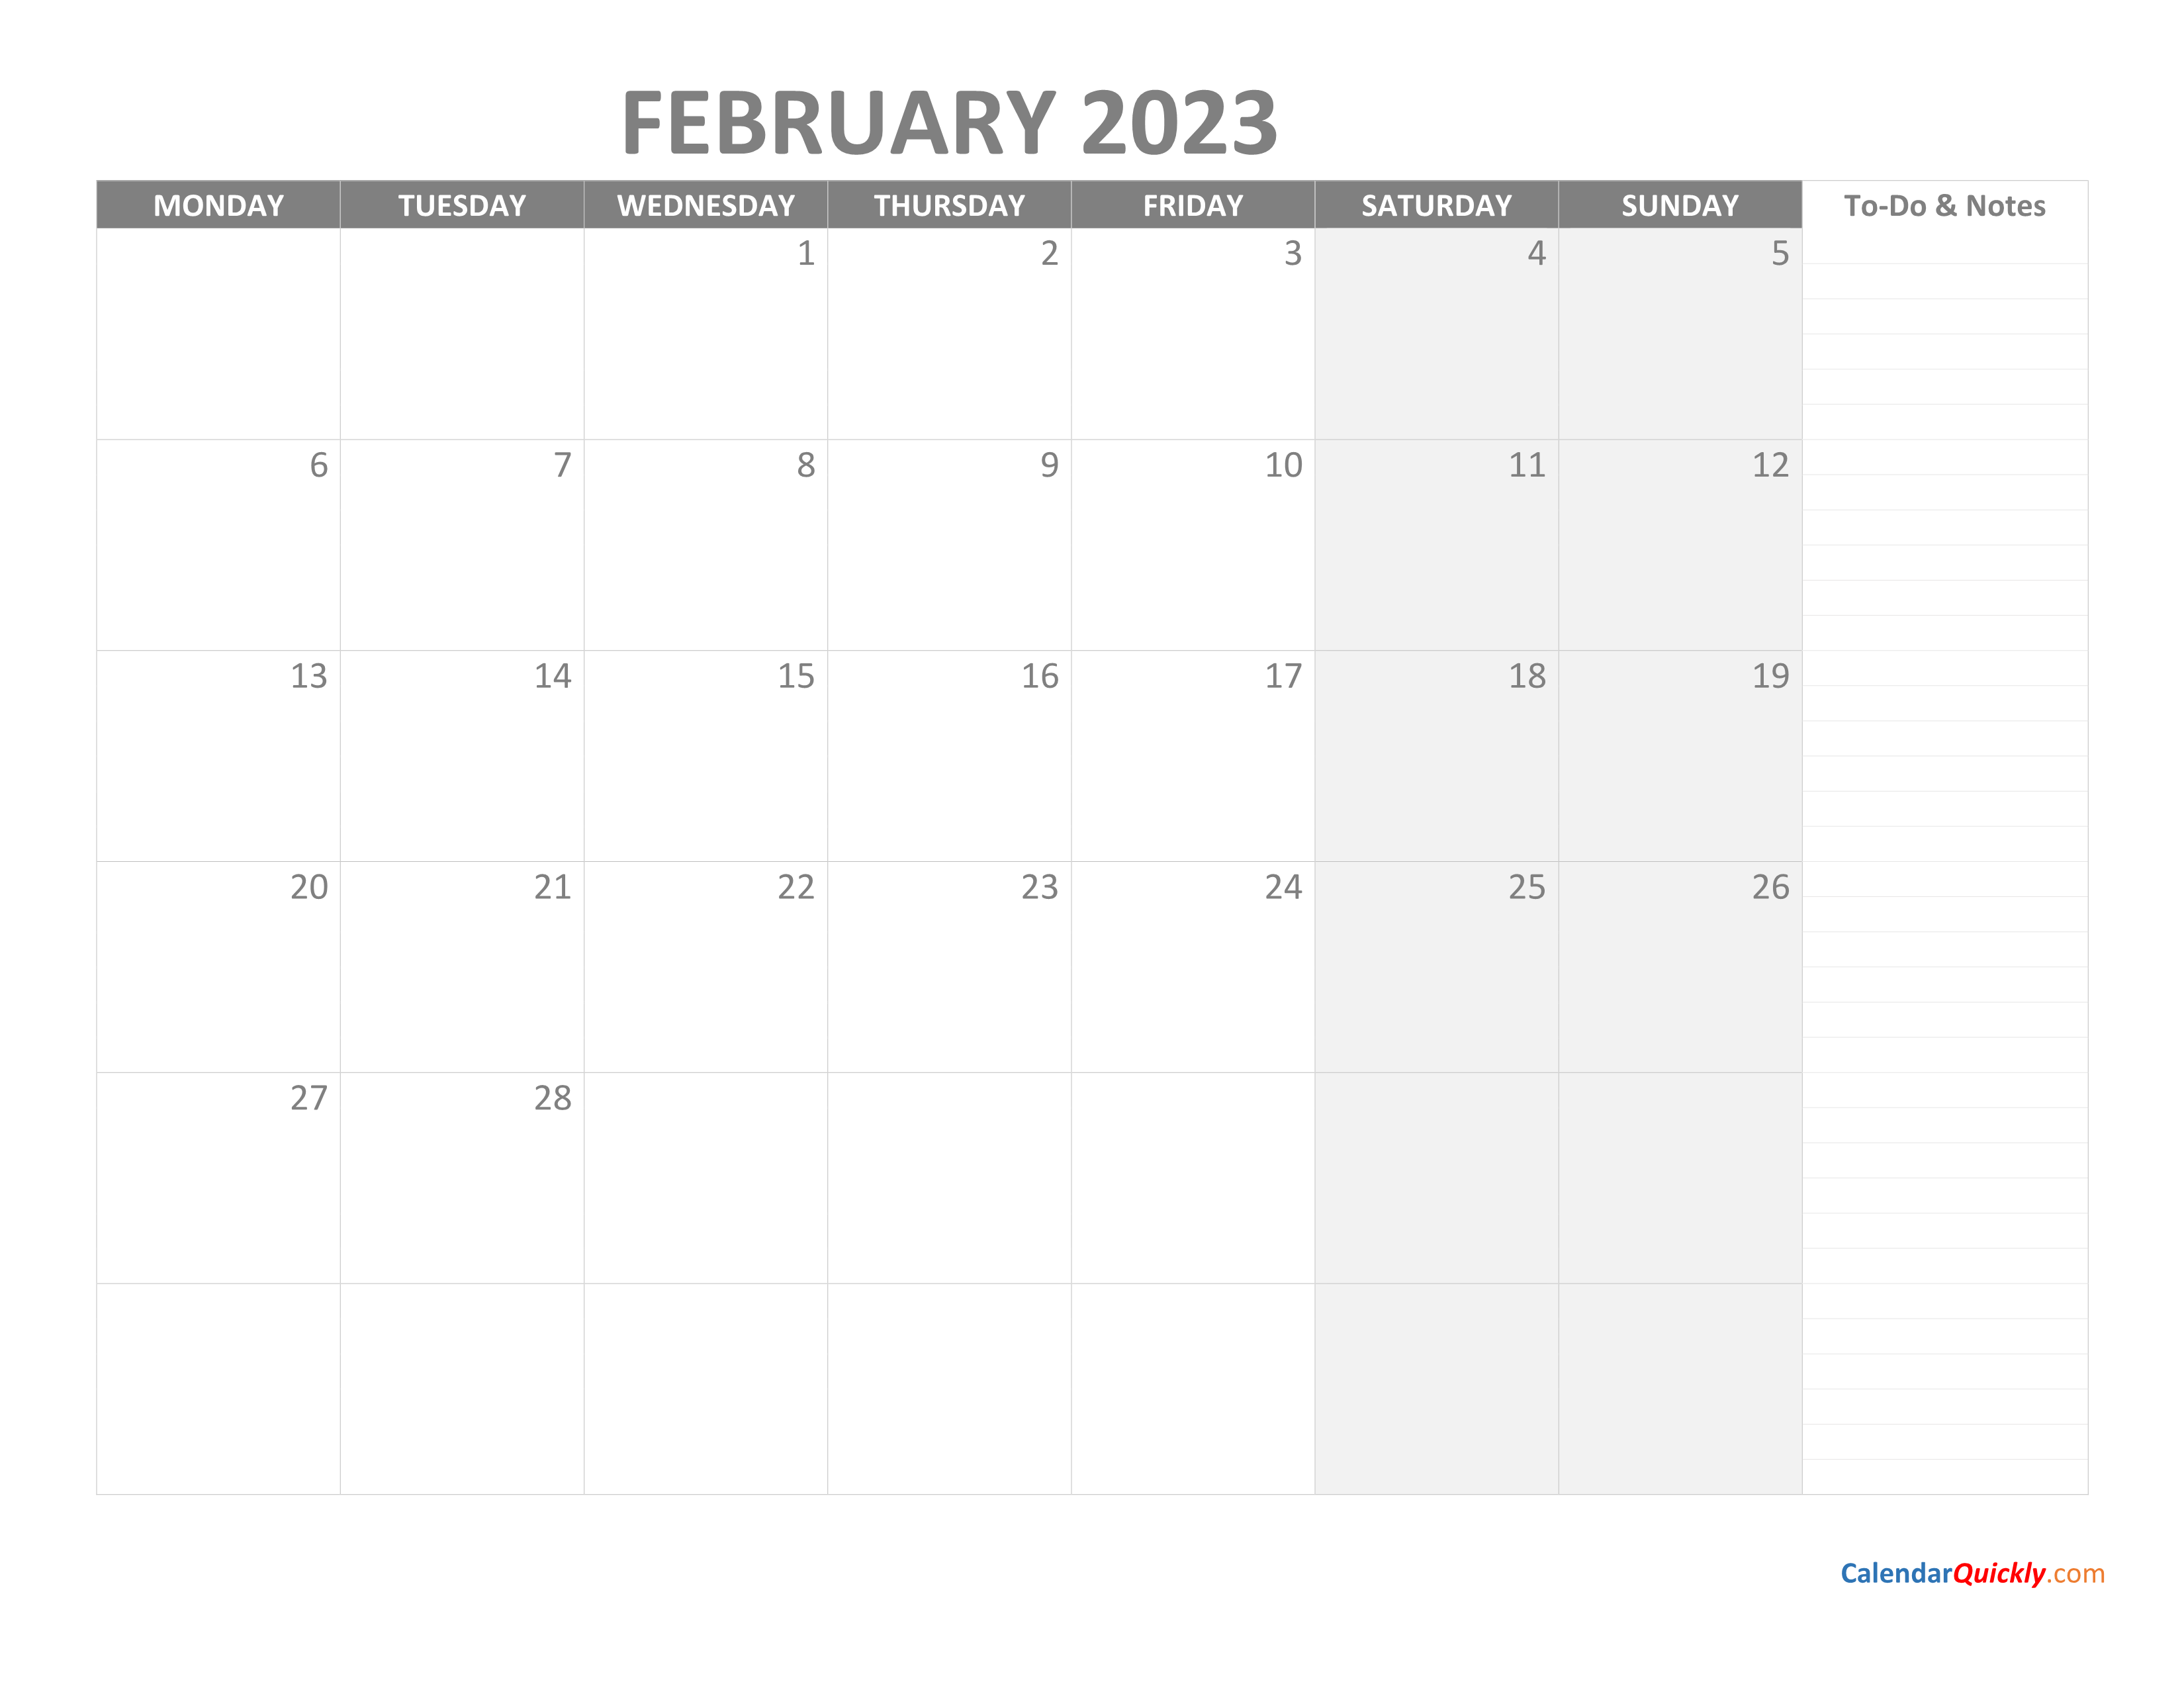 February Monday Calendar 2023 With Notes Calendar Quickly